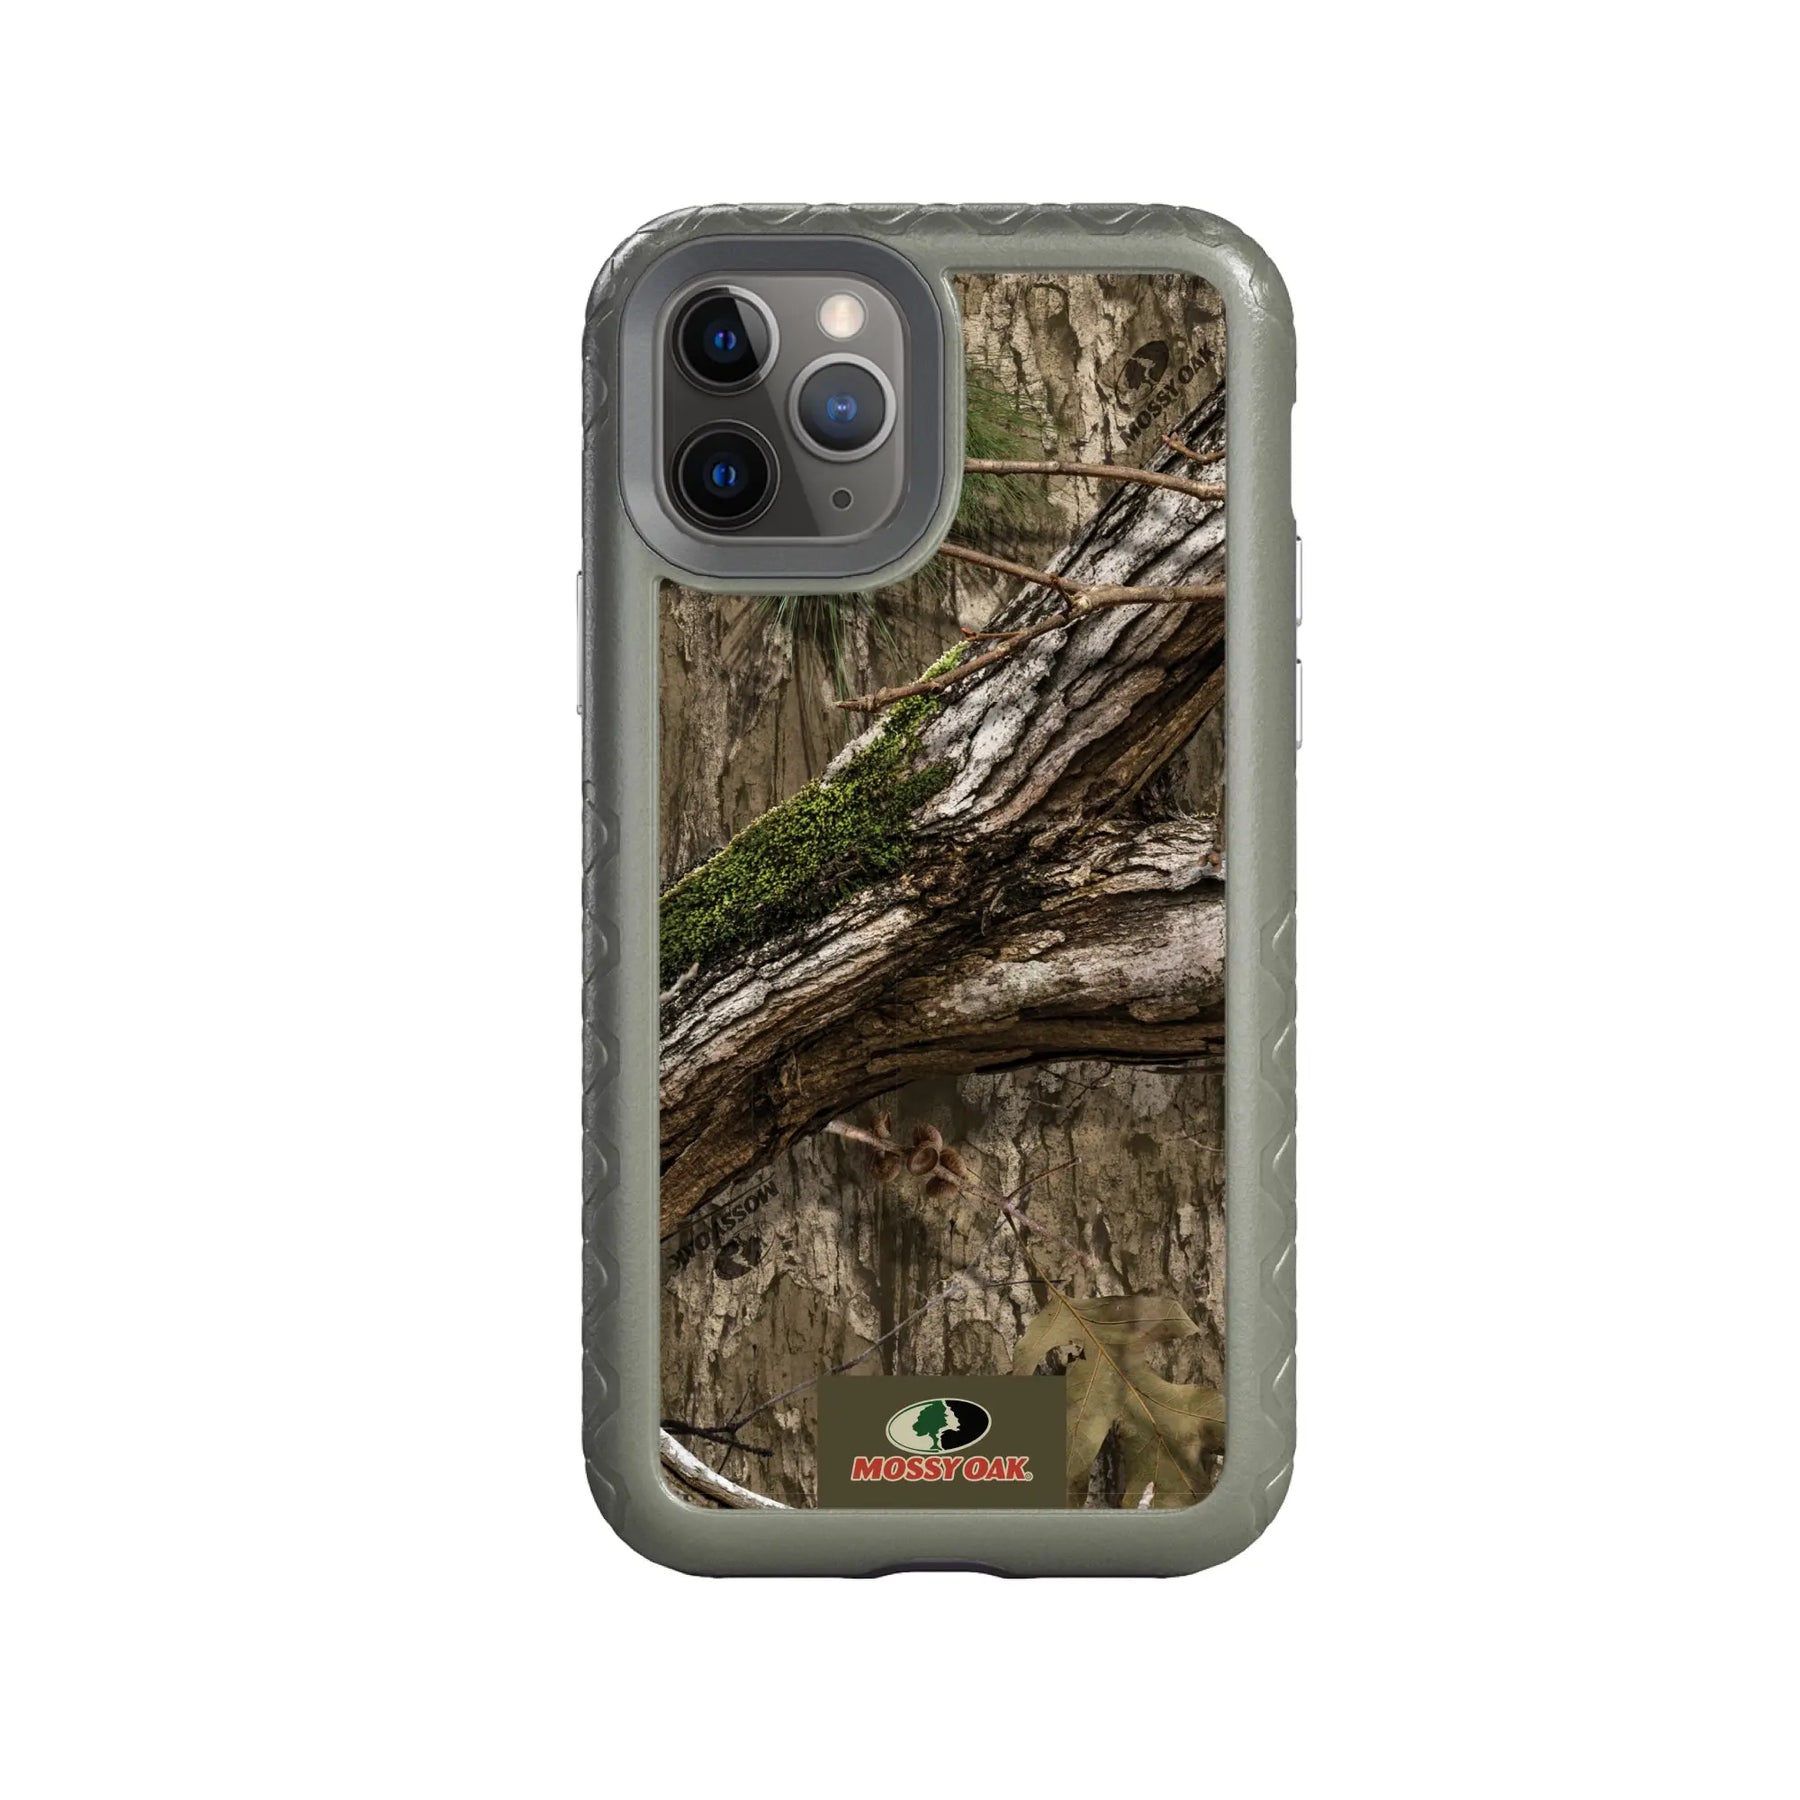 Mossy Oak Fortitude Series for Apple iPhone 11 Pro - Country DNA - Custom Case - OliveDrabGreen - cellhelmet